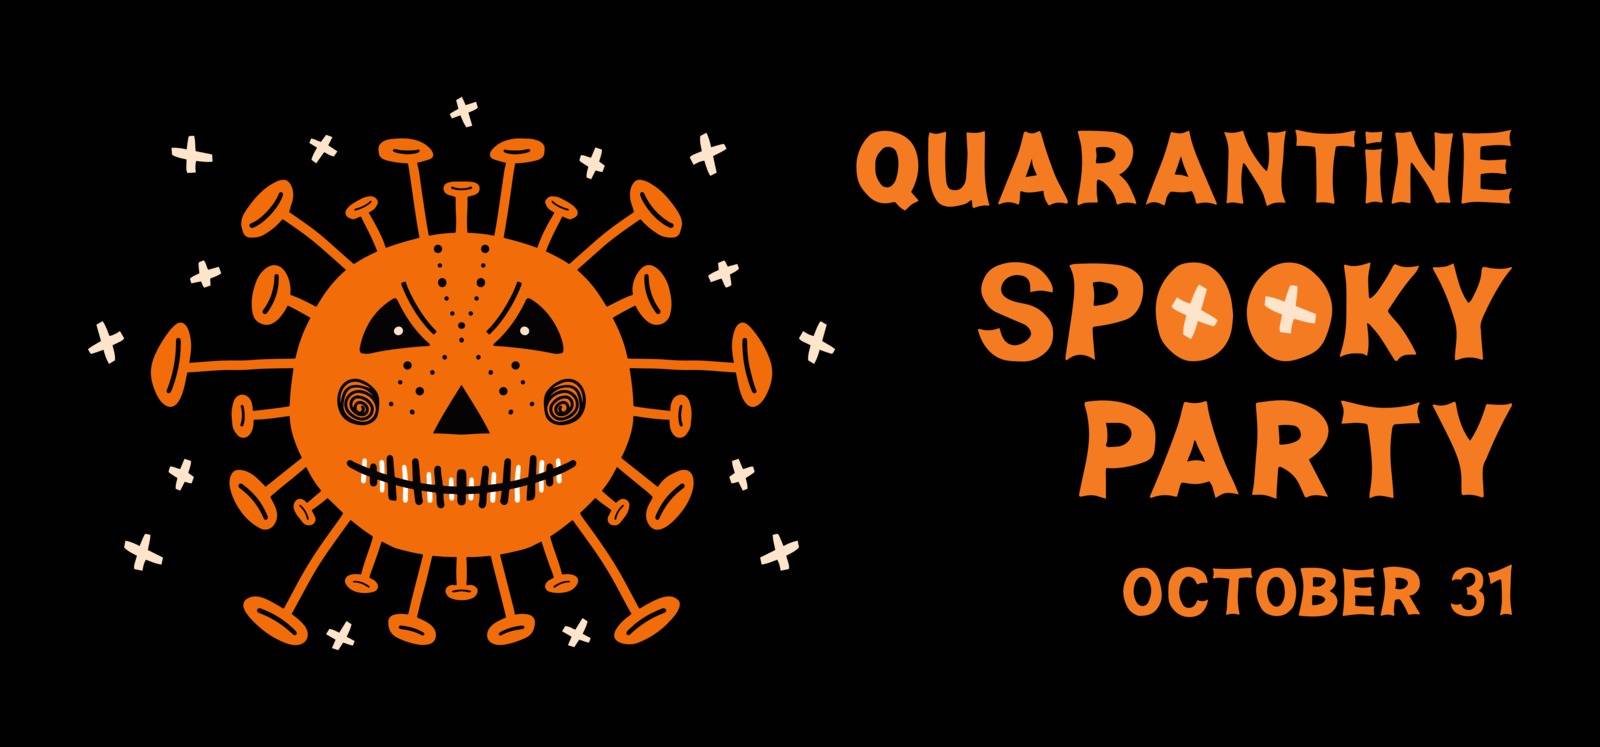 Halloween flyer. Coronavirus bacteria with scary face and orange lettering on dark background. Vector stock illustration.